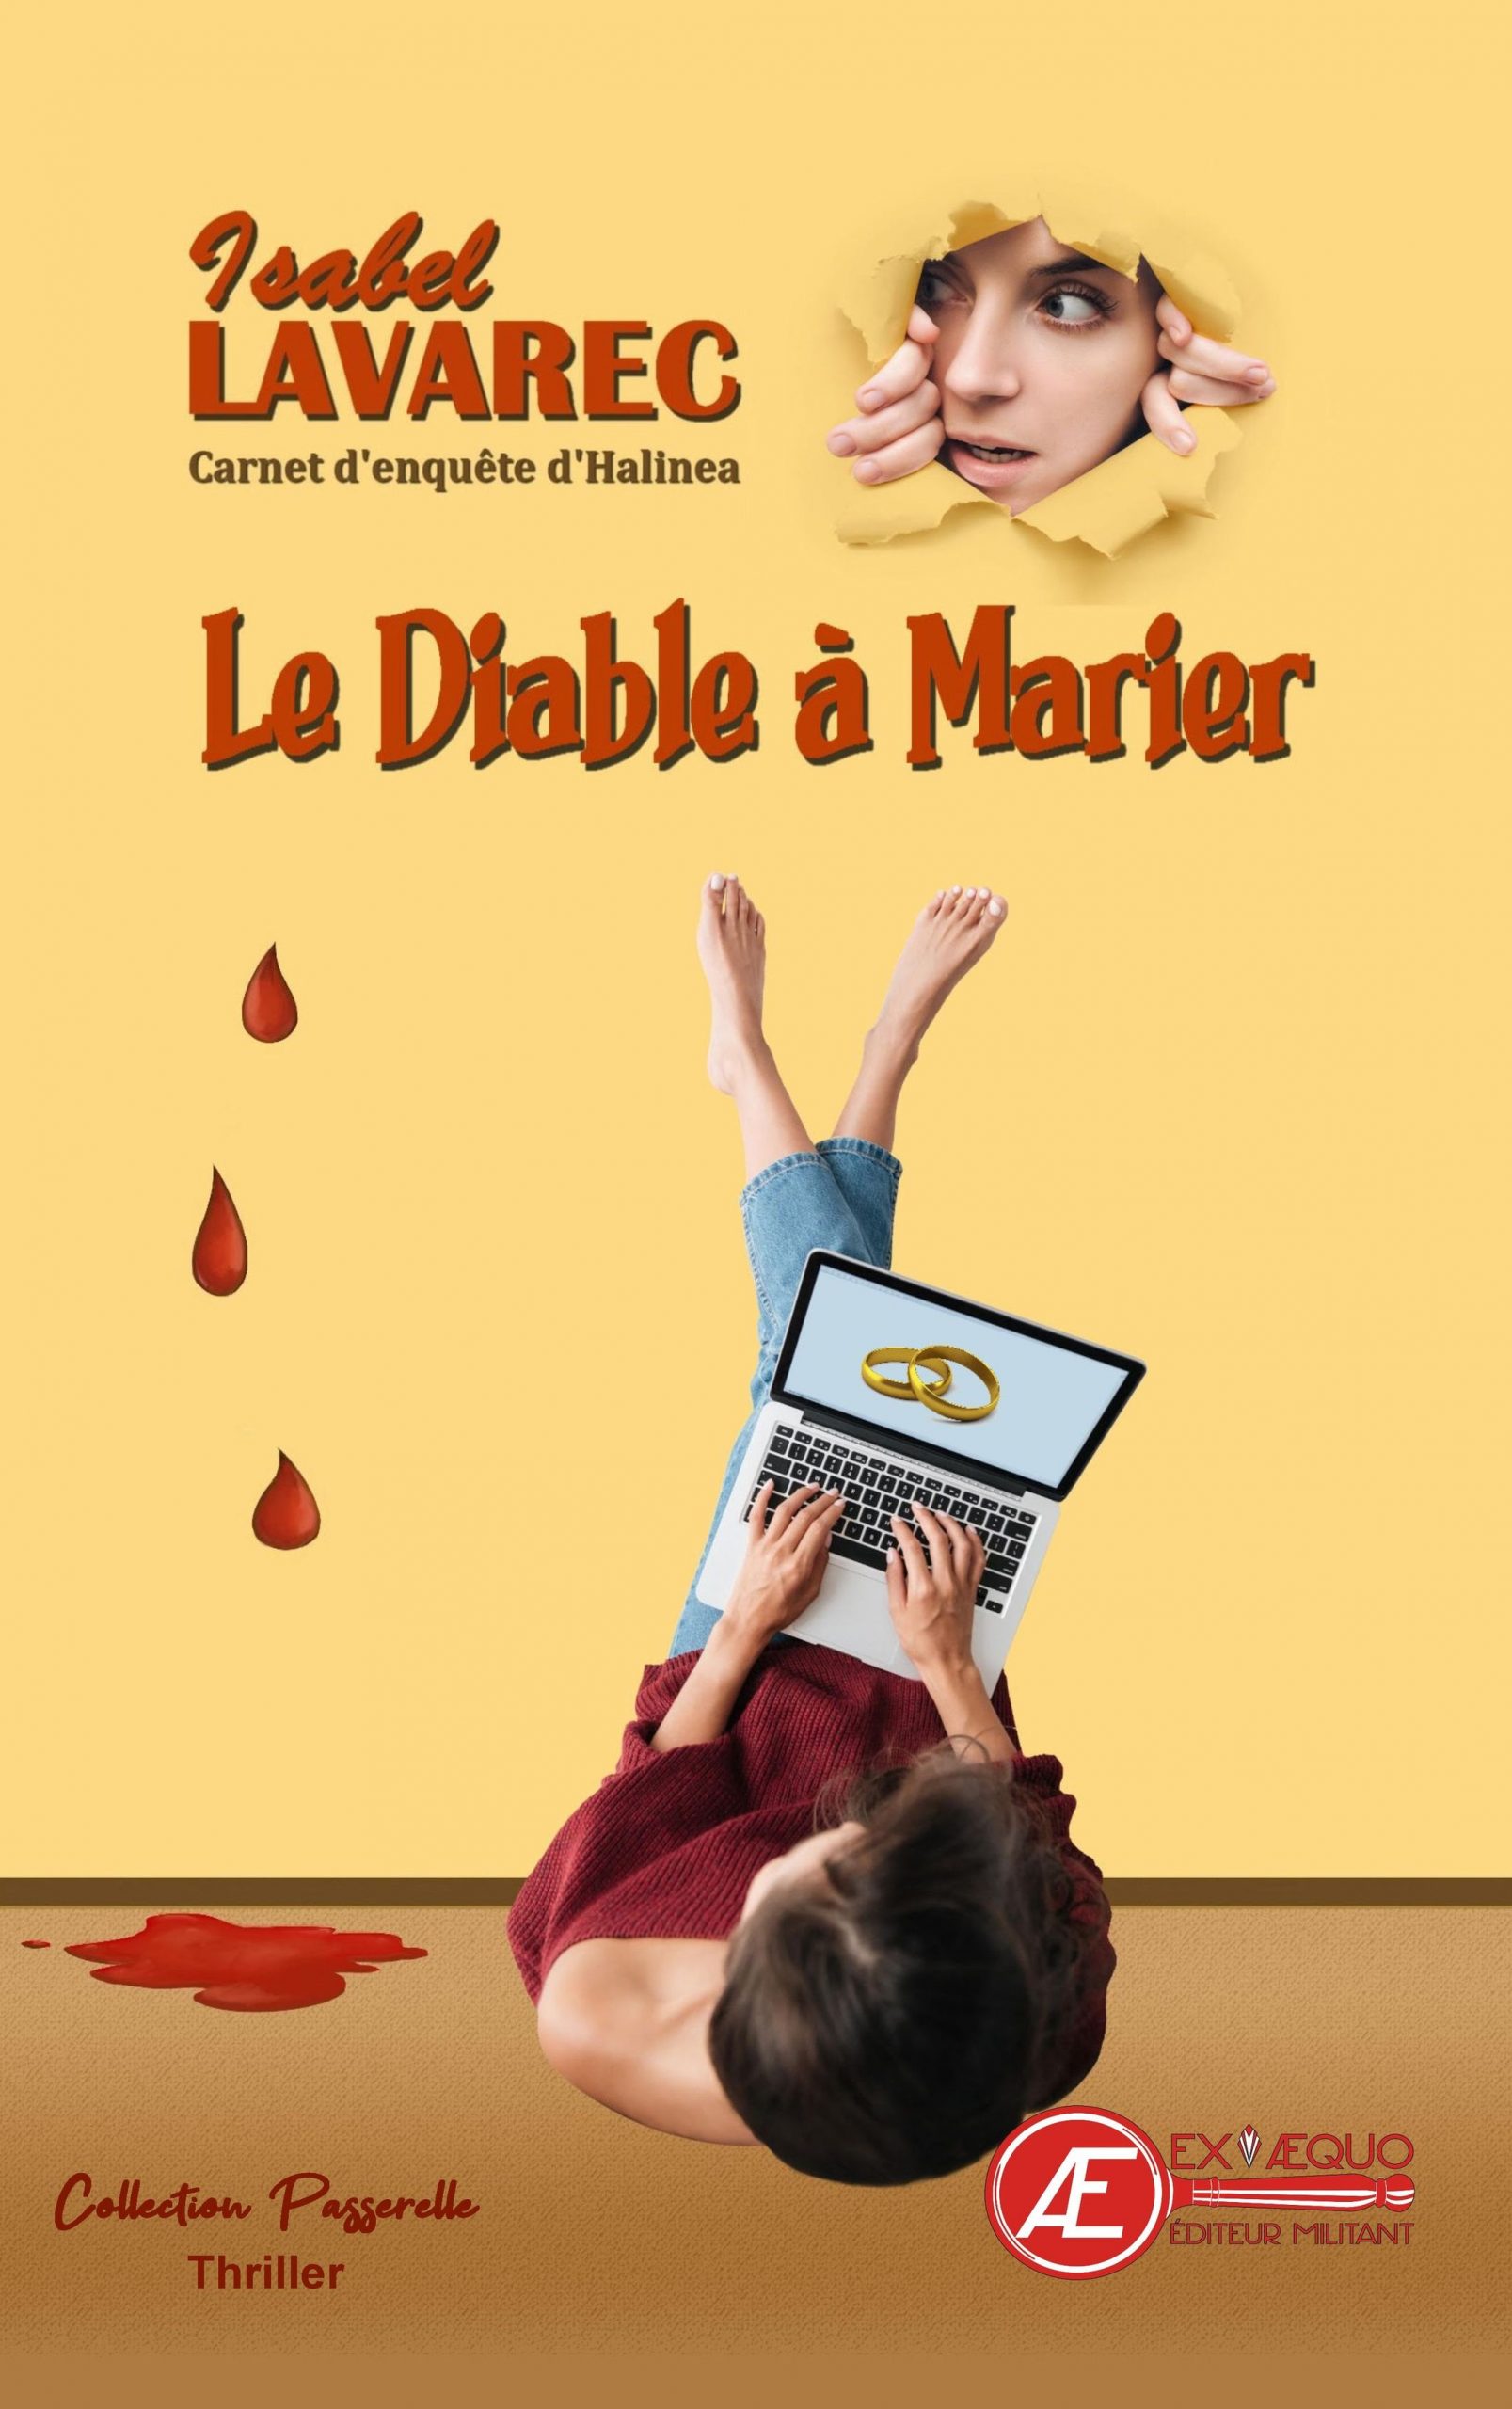 You are currently viewing Le diable à marier, d’Isabel Lavarec